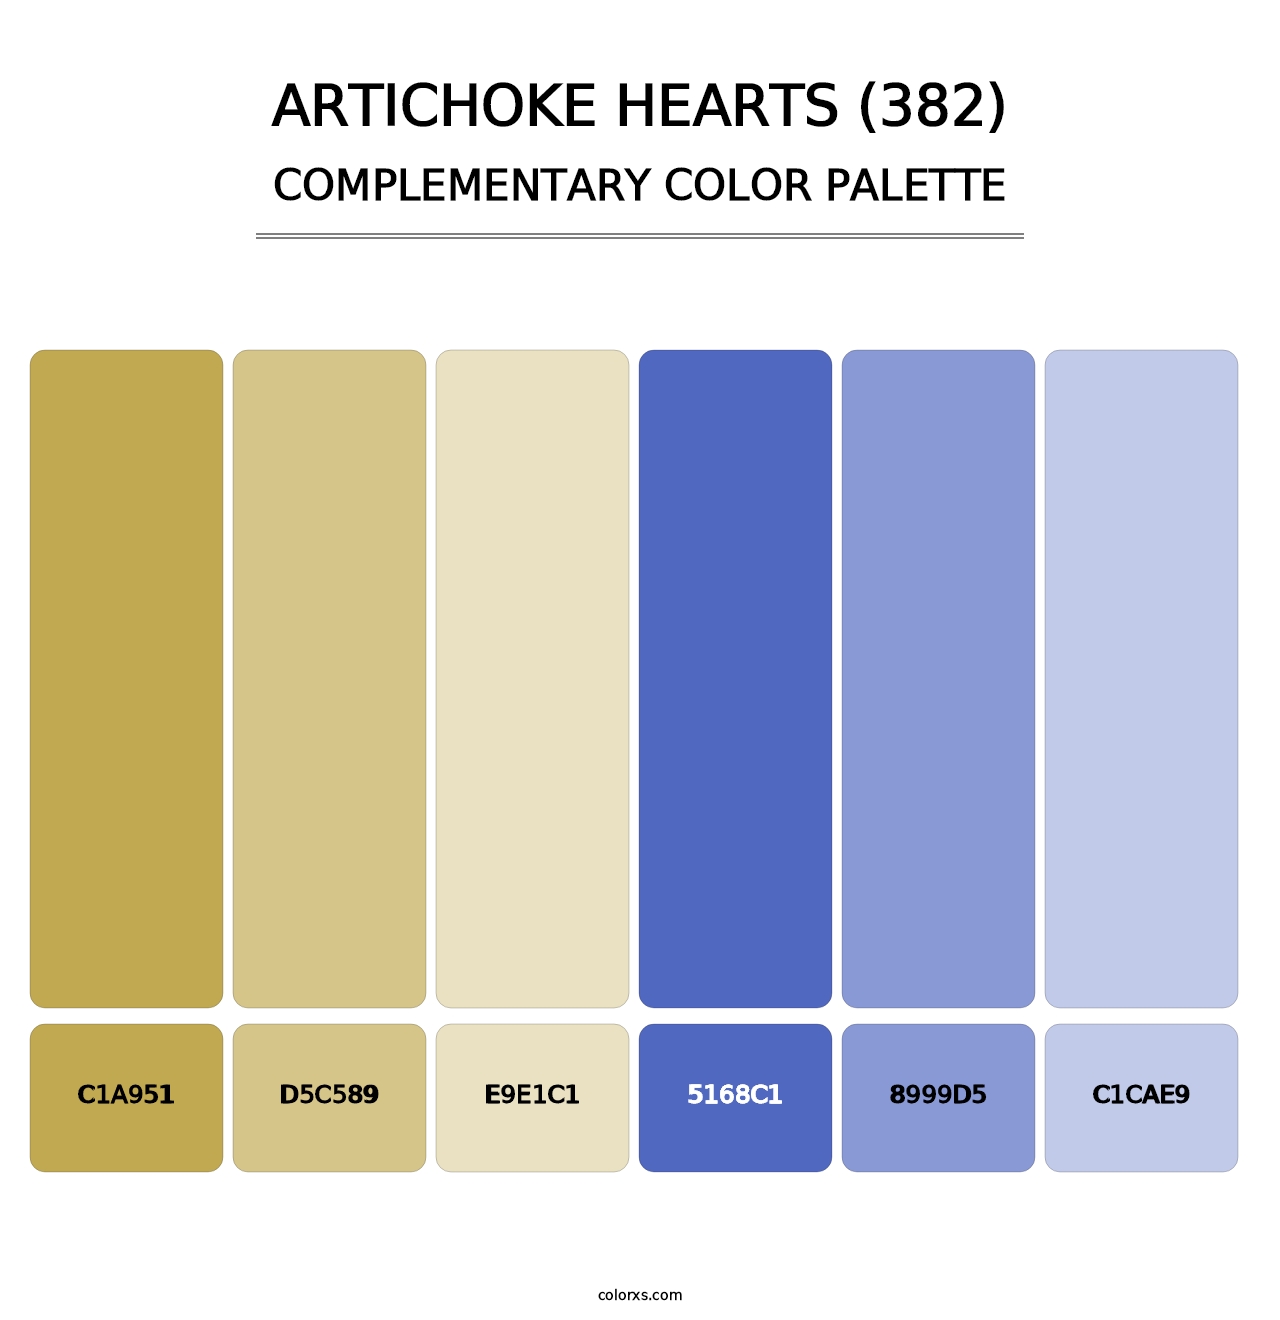 Artichoke Hearts (382) - Complementary Color Palette